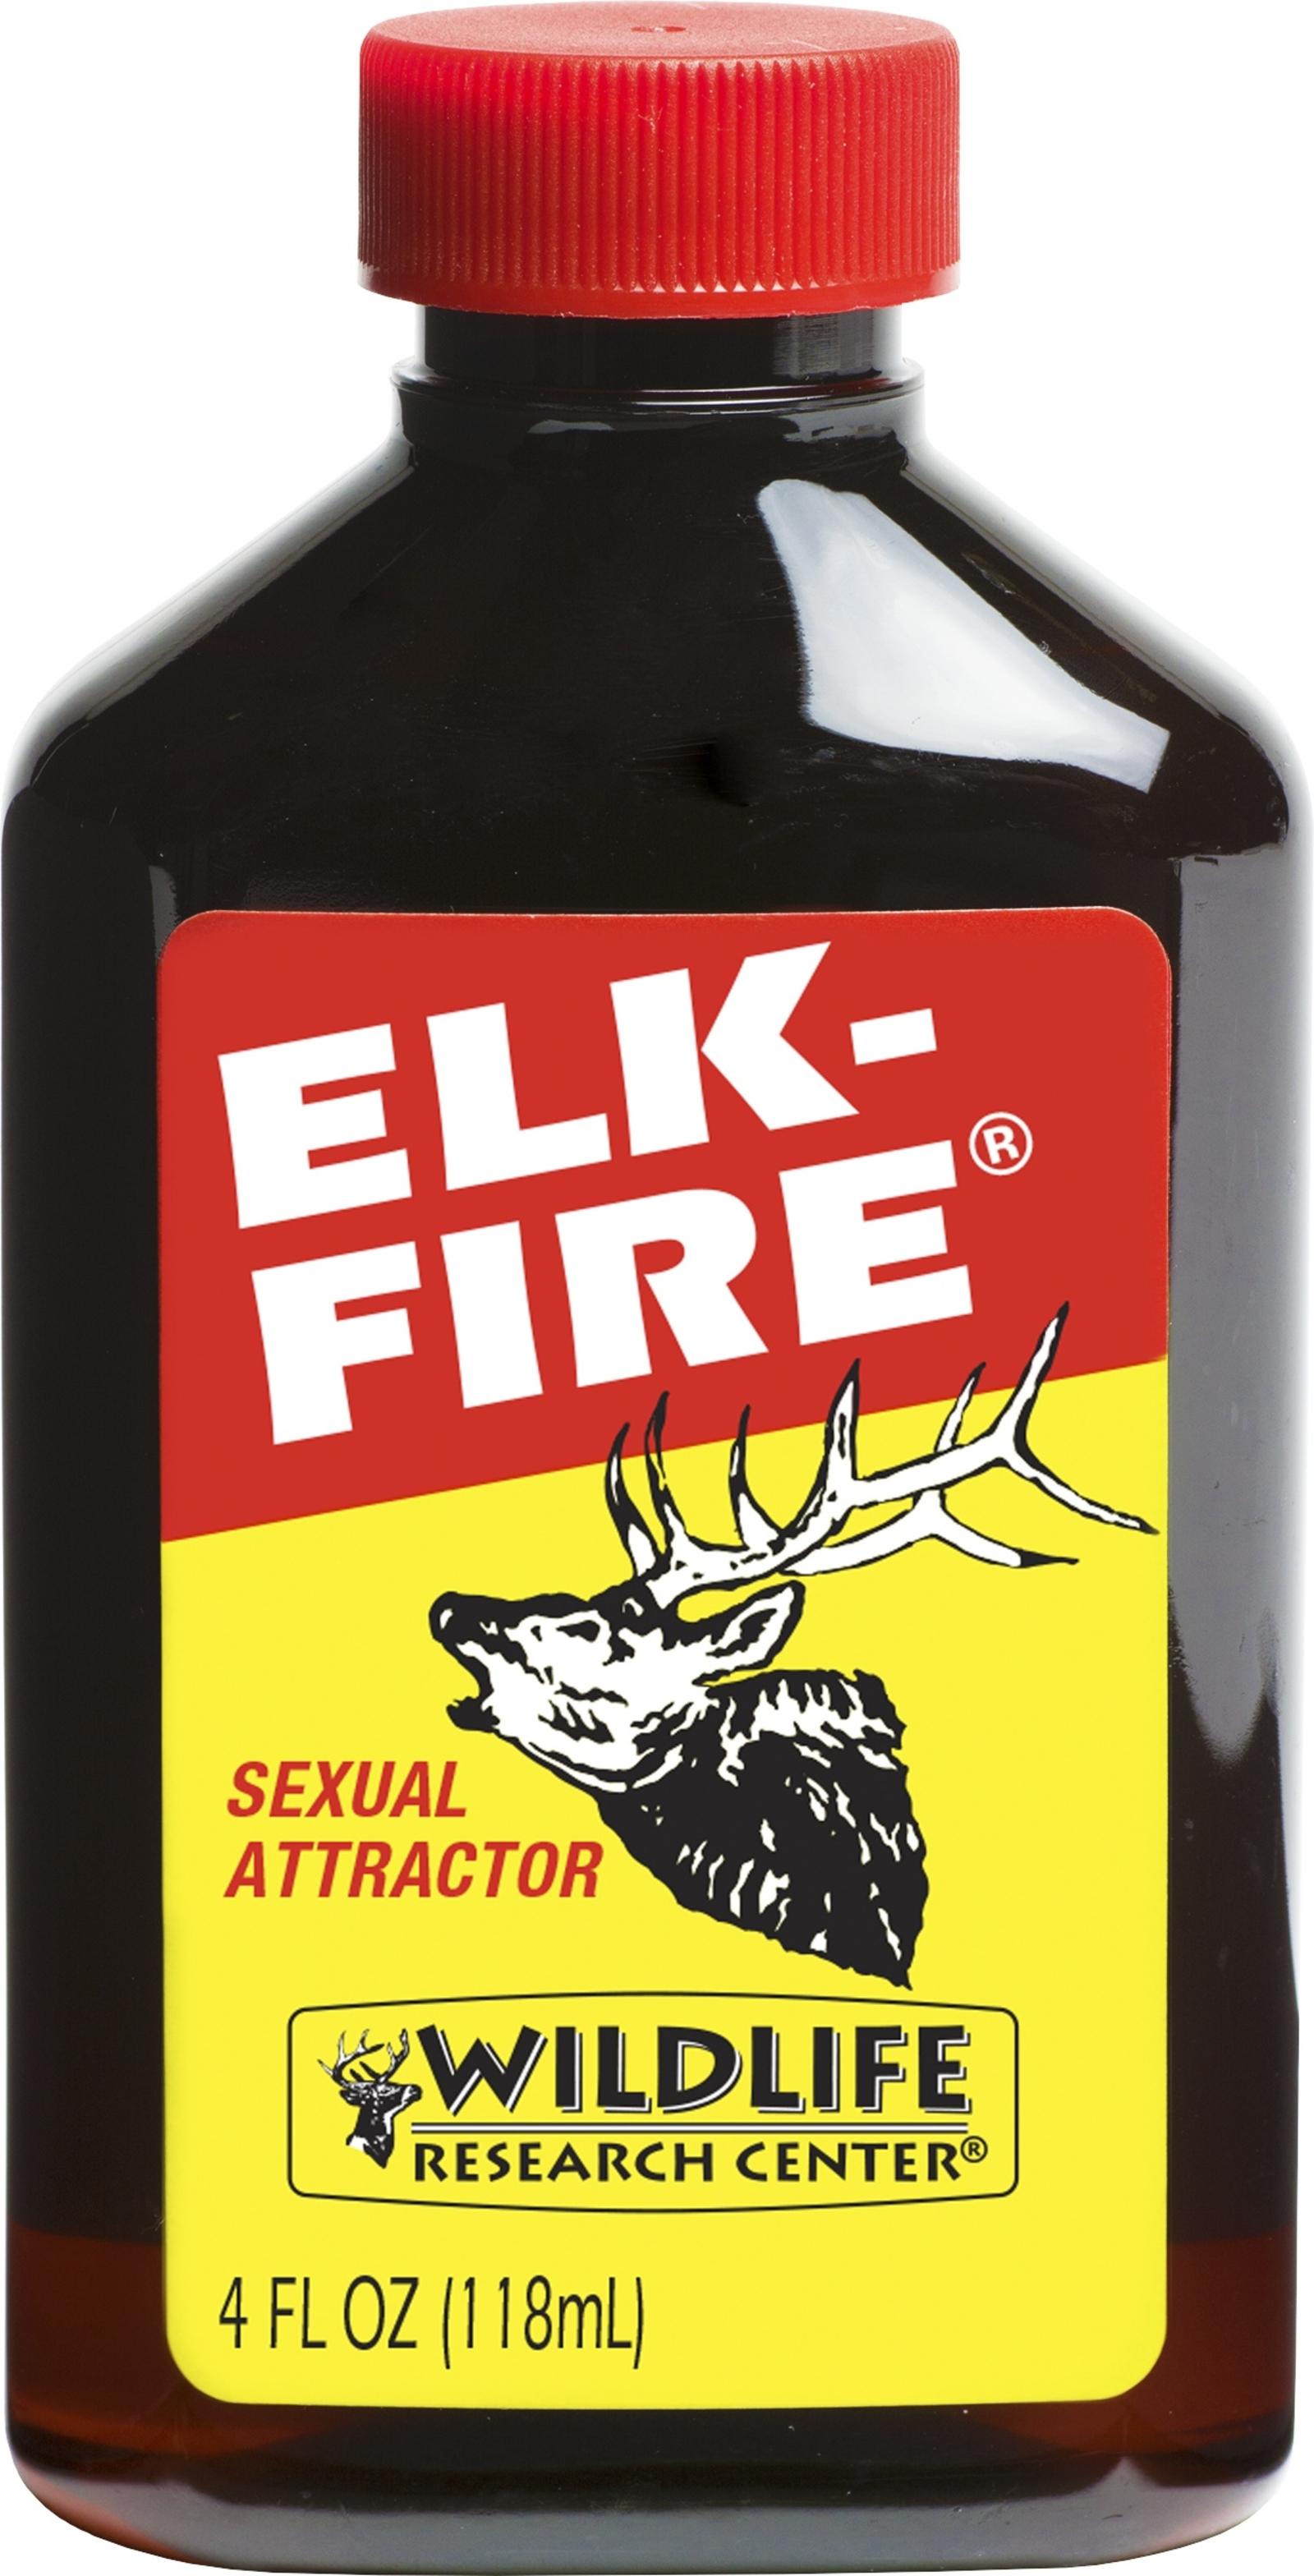 Wildlife Research Center Elk-Fire®